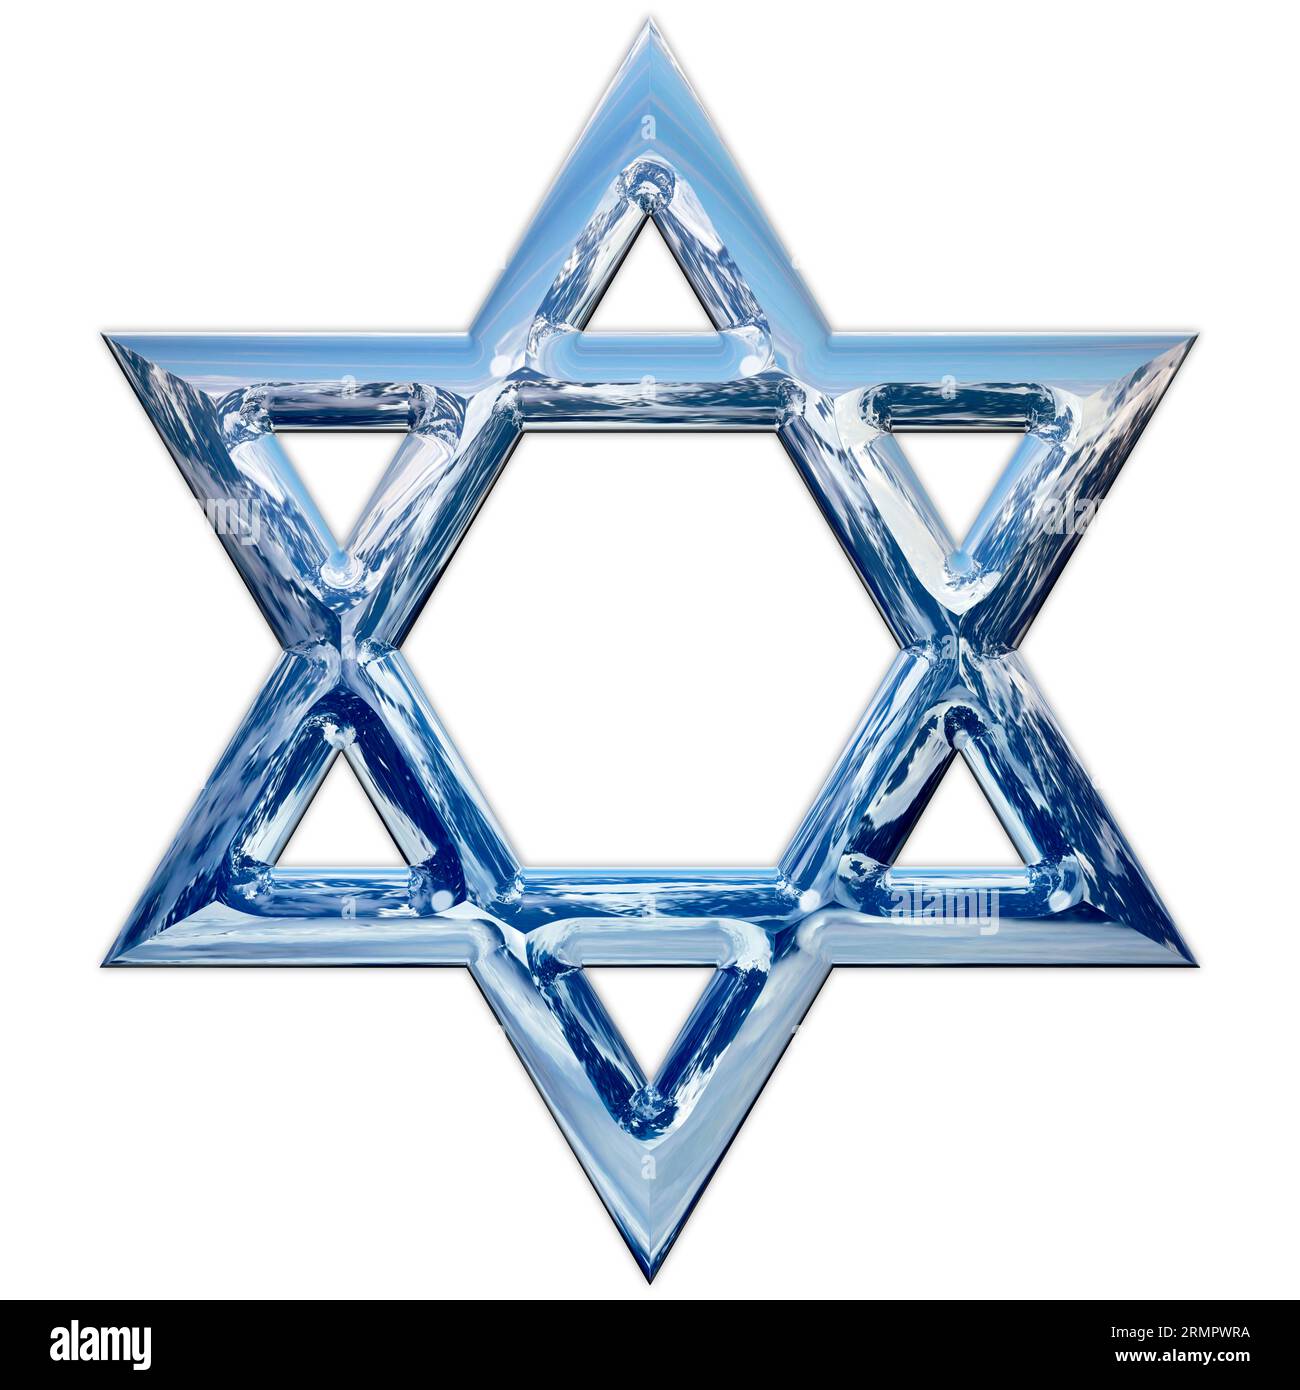 Judaism religion, traditional star of david symbol, silver metallic style graphic elaboration, illustration on the white background Stock Photo